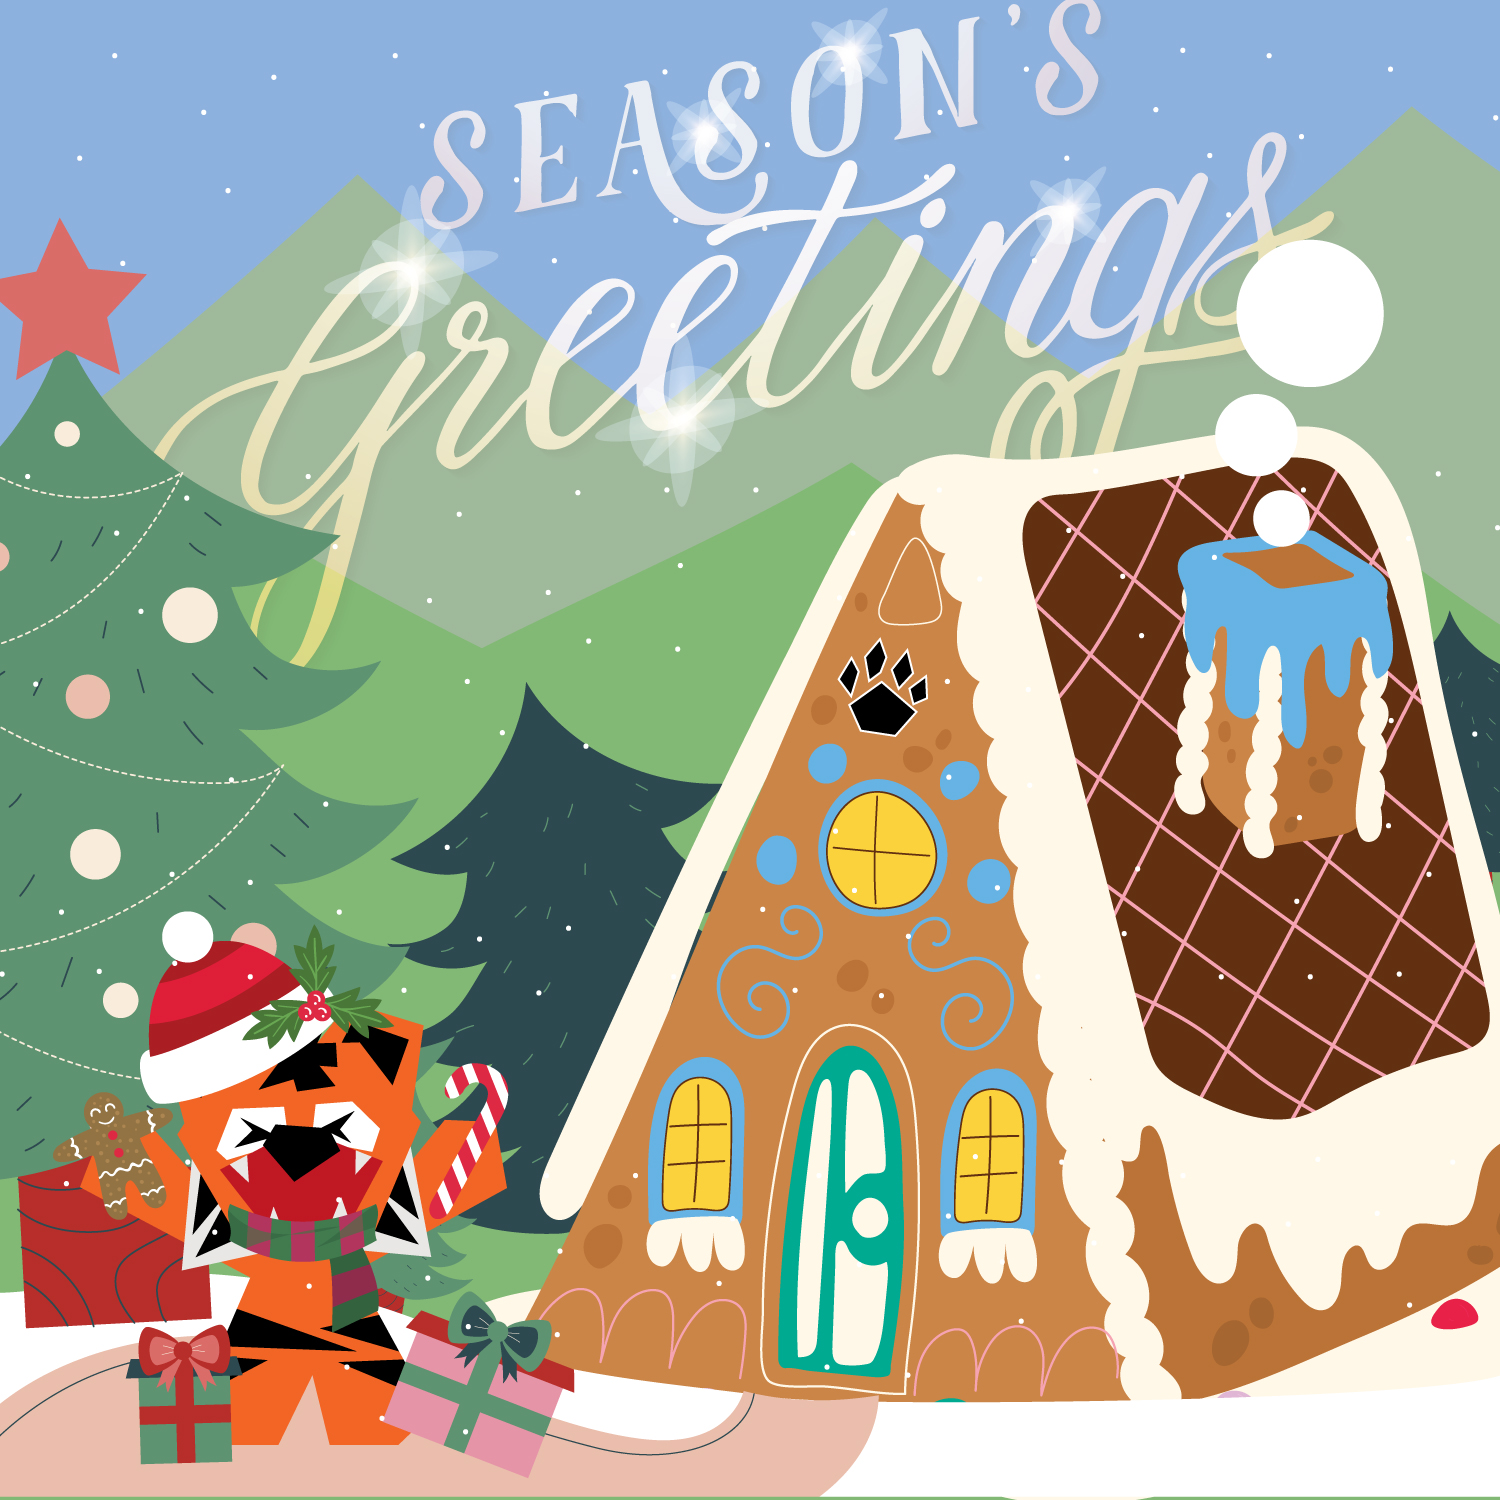 Season's Greetings, from DotAsia Organisation